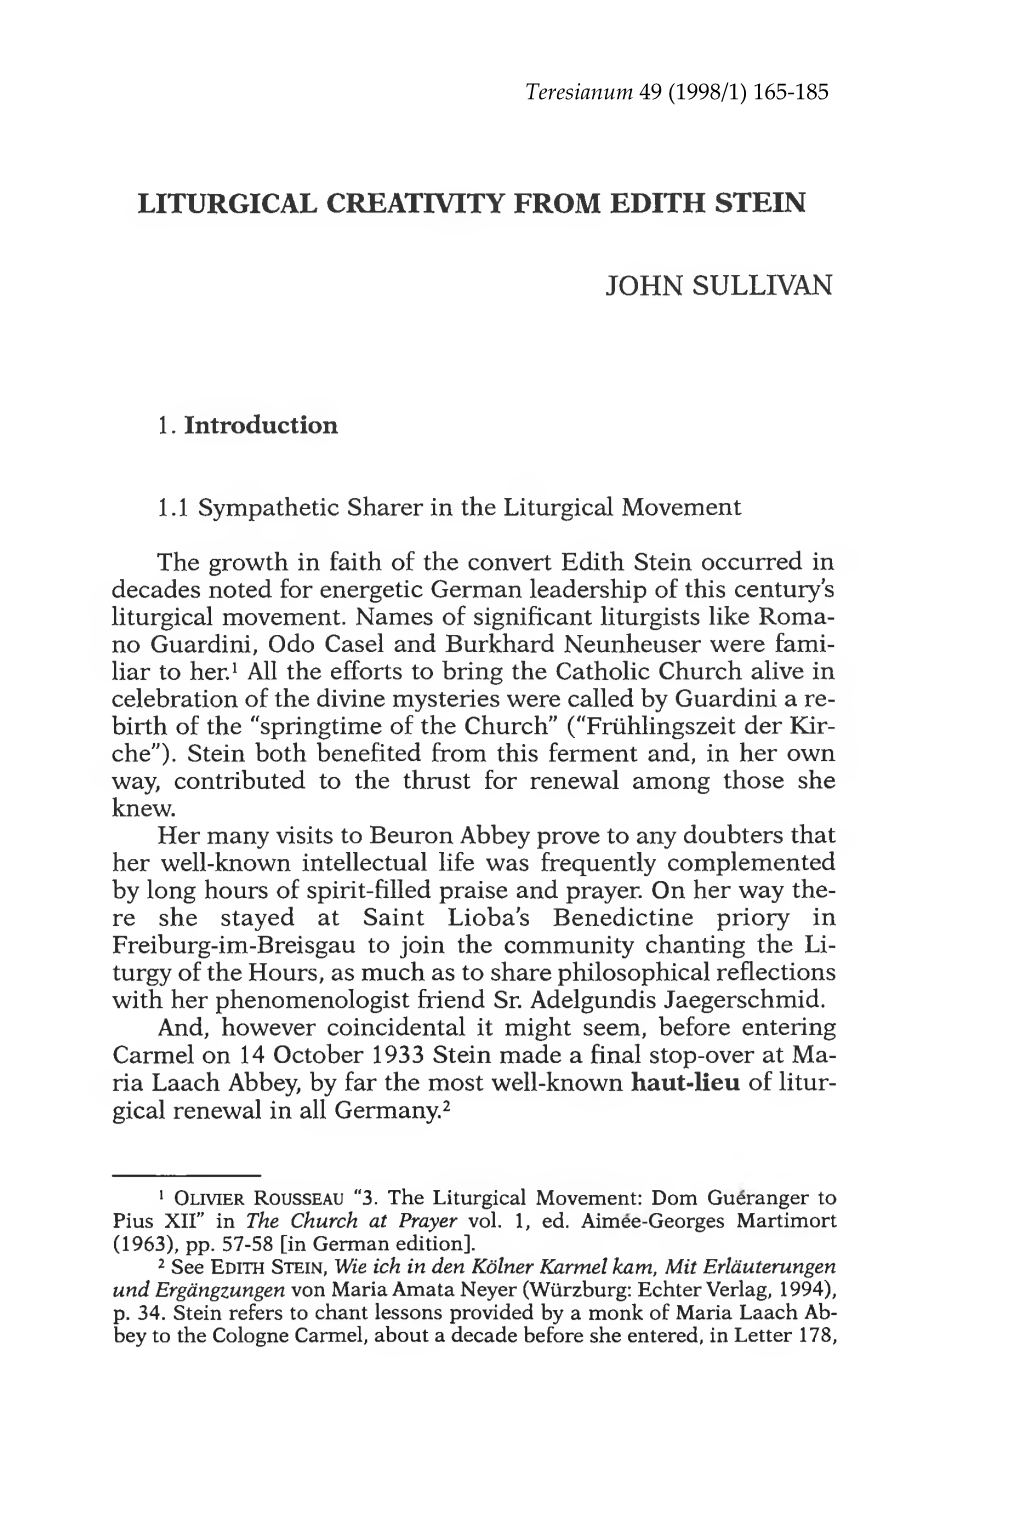 Liturgical Creativity from Edith Stein John Sullivan